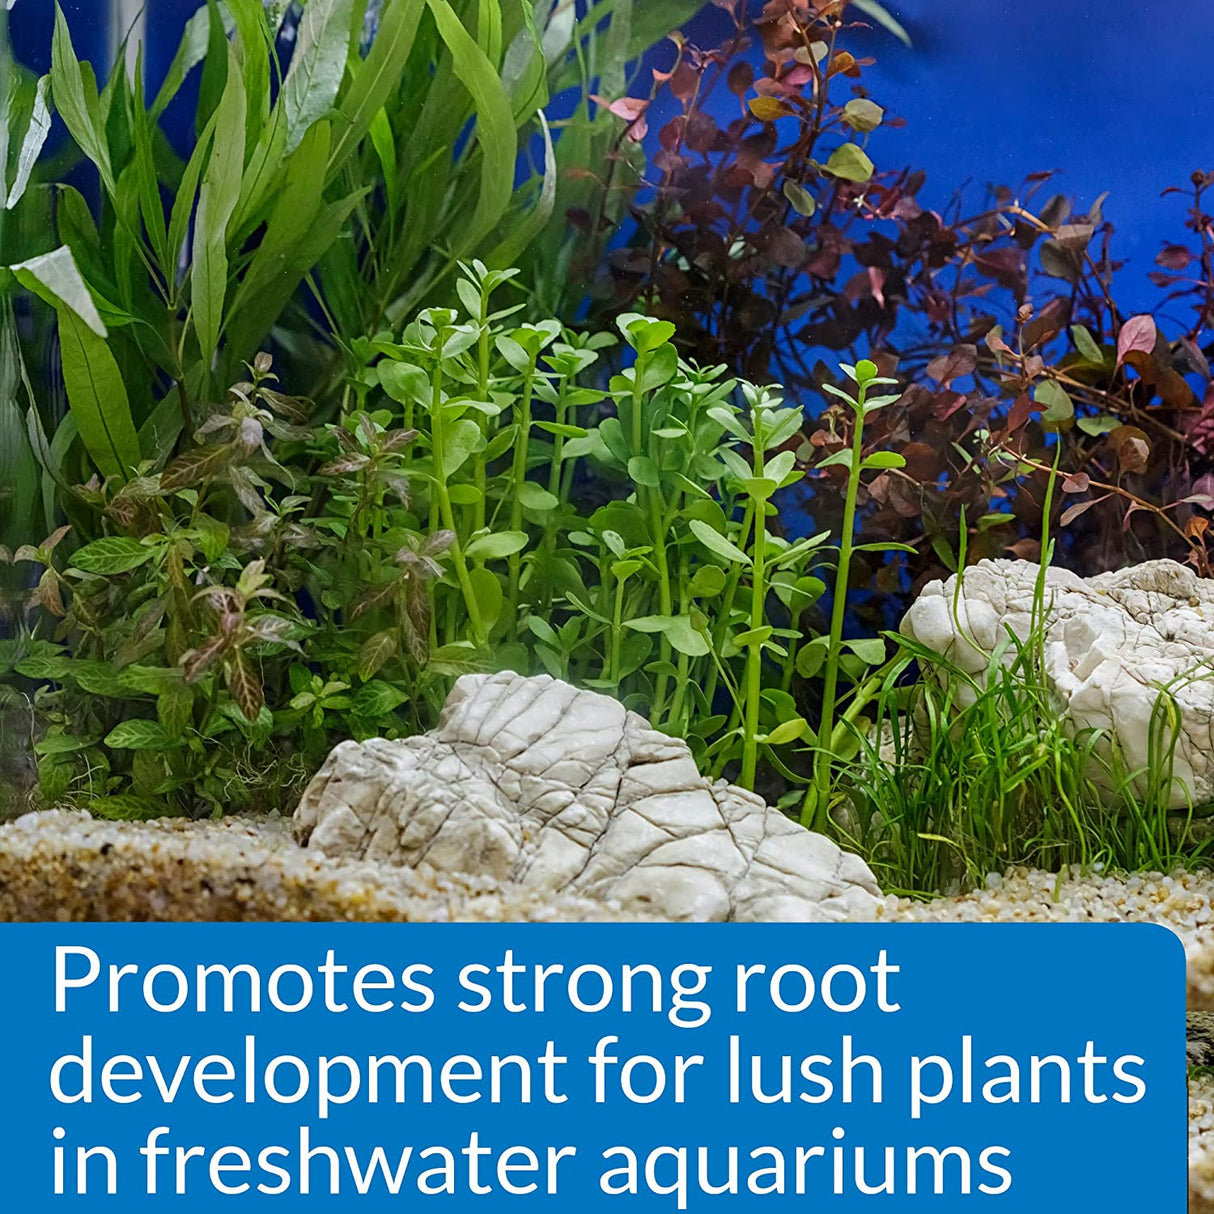 60 count (6 x 10 ct) API Root Tabs Plus Iron Promotes Lush Growth of Aquarium Plants